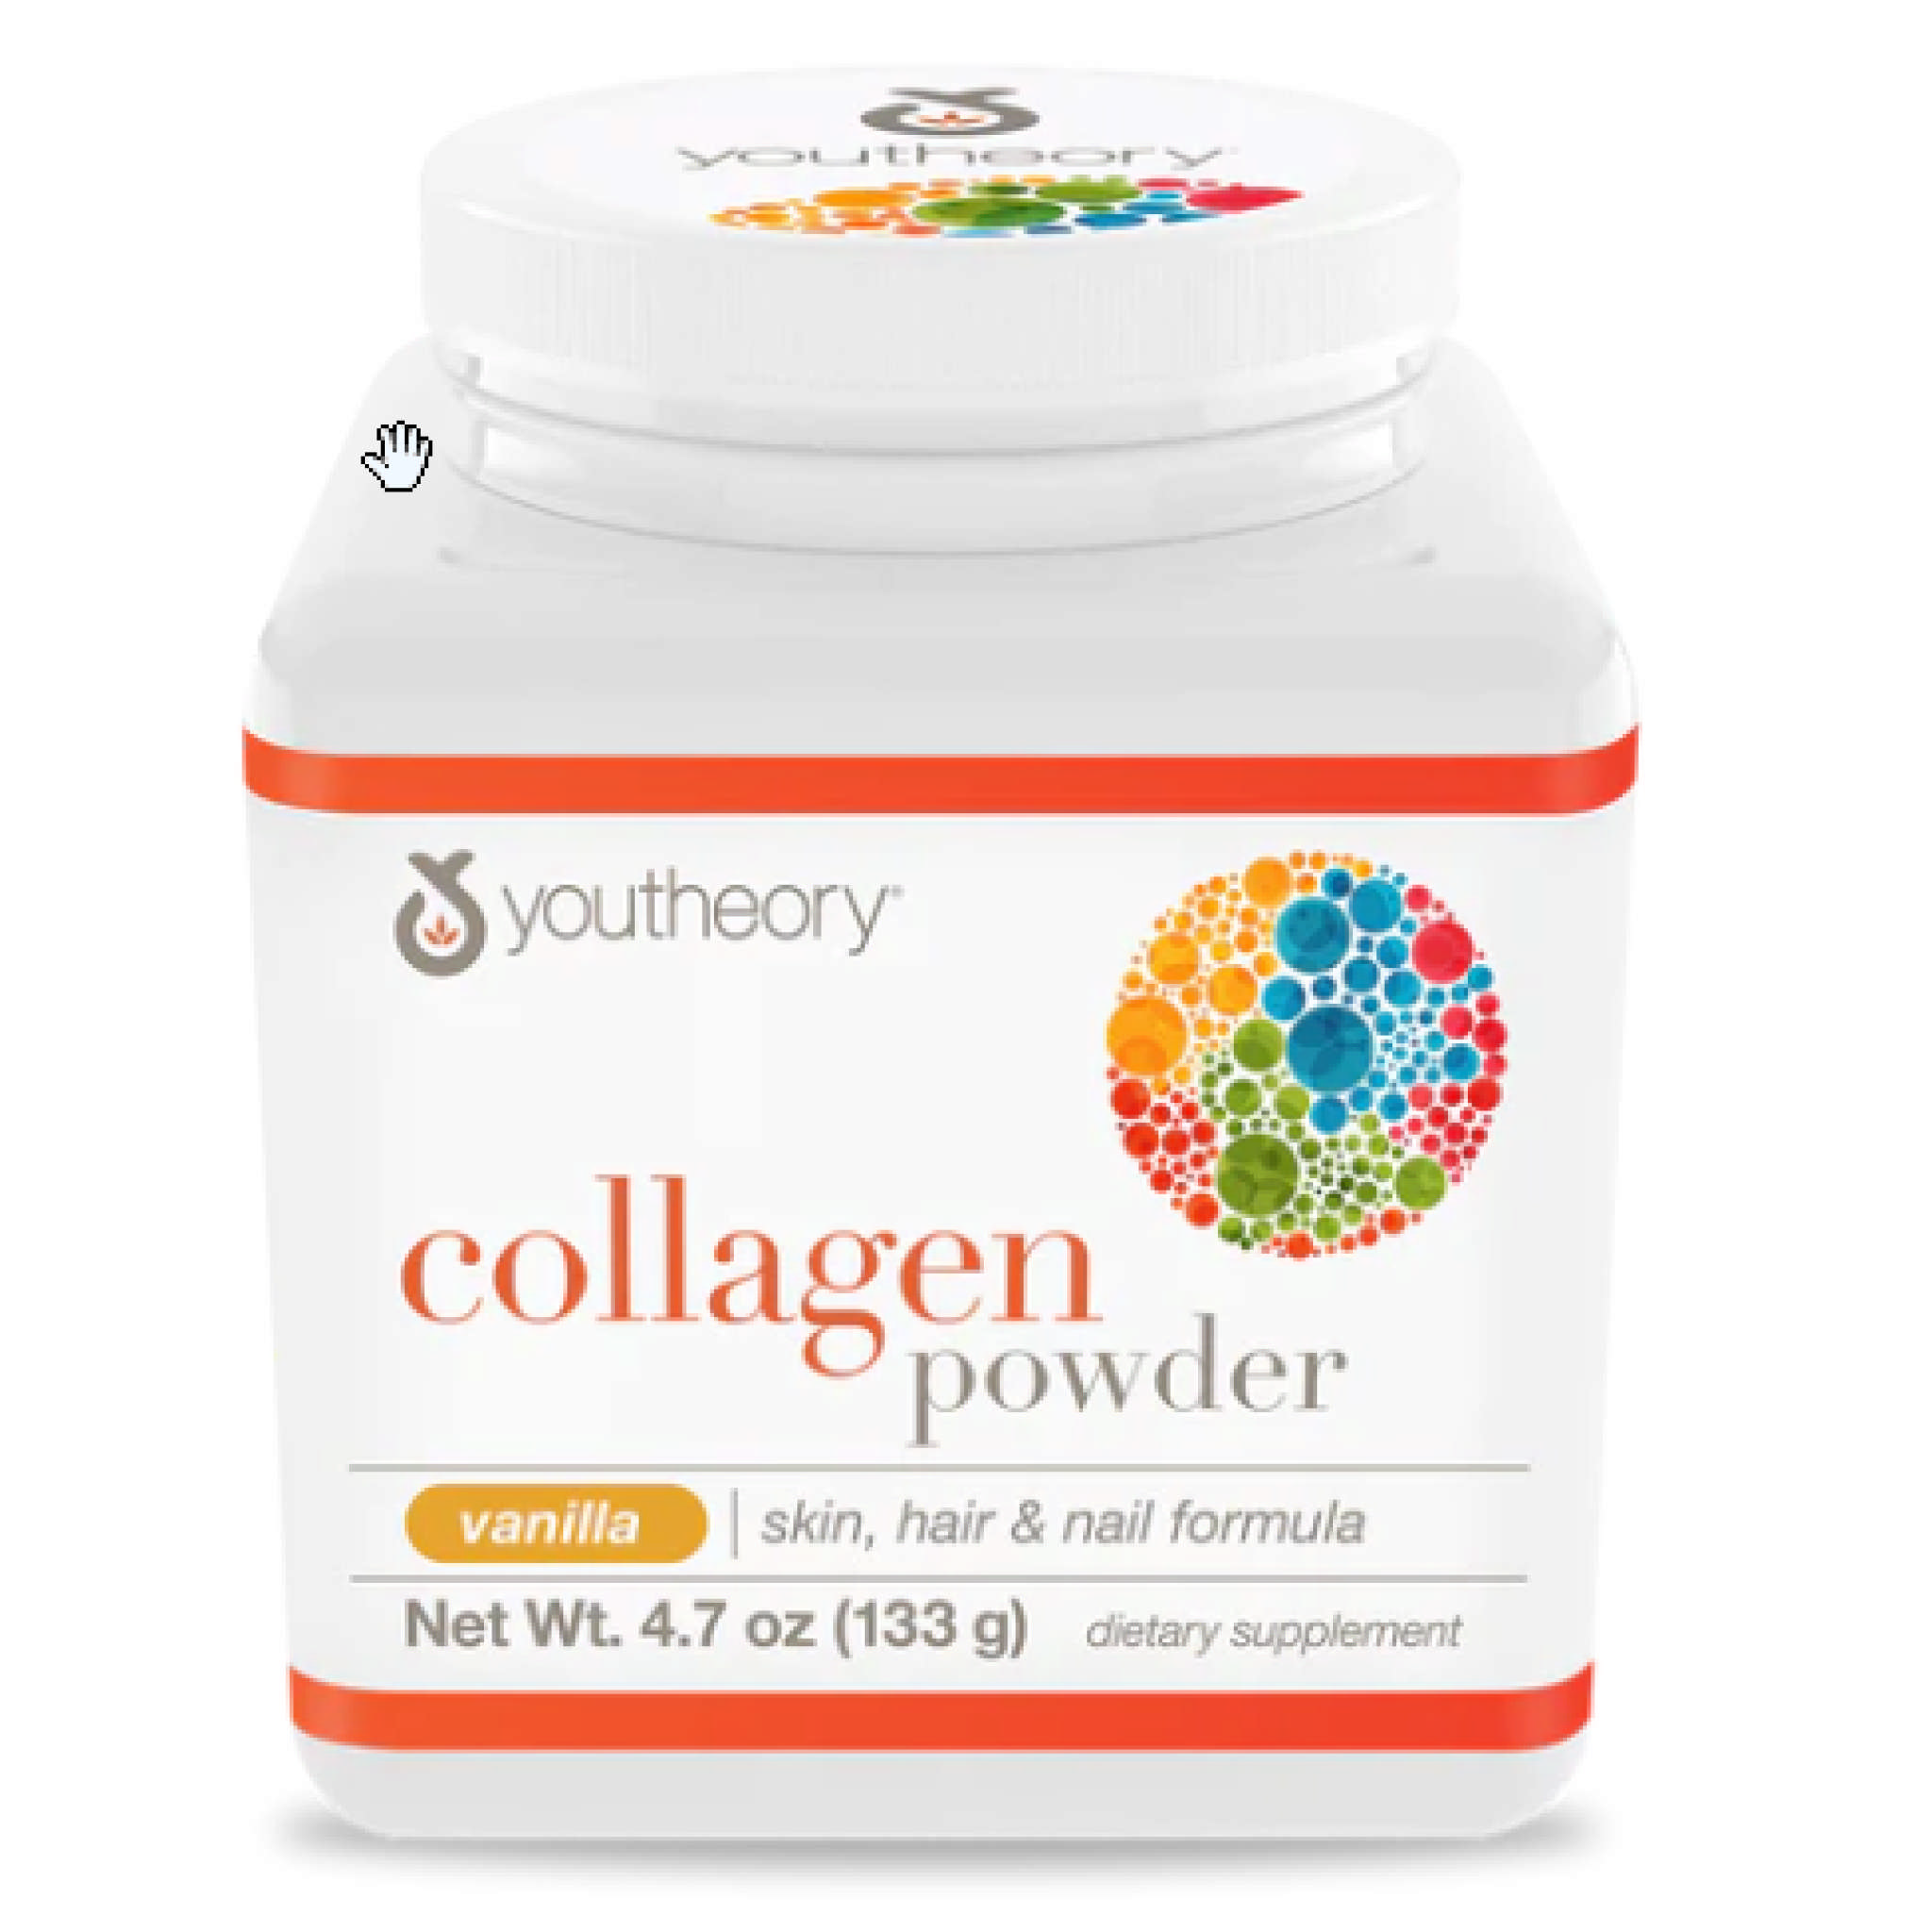 Youtheory - Collagen powder Van 1 & 3